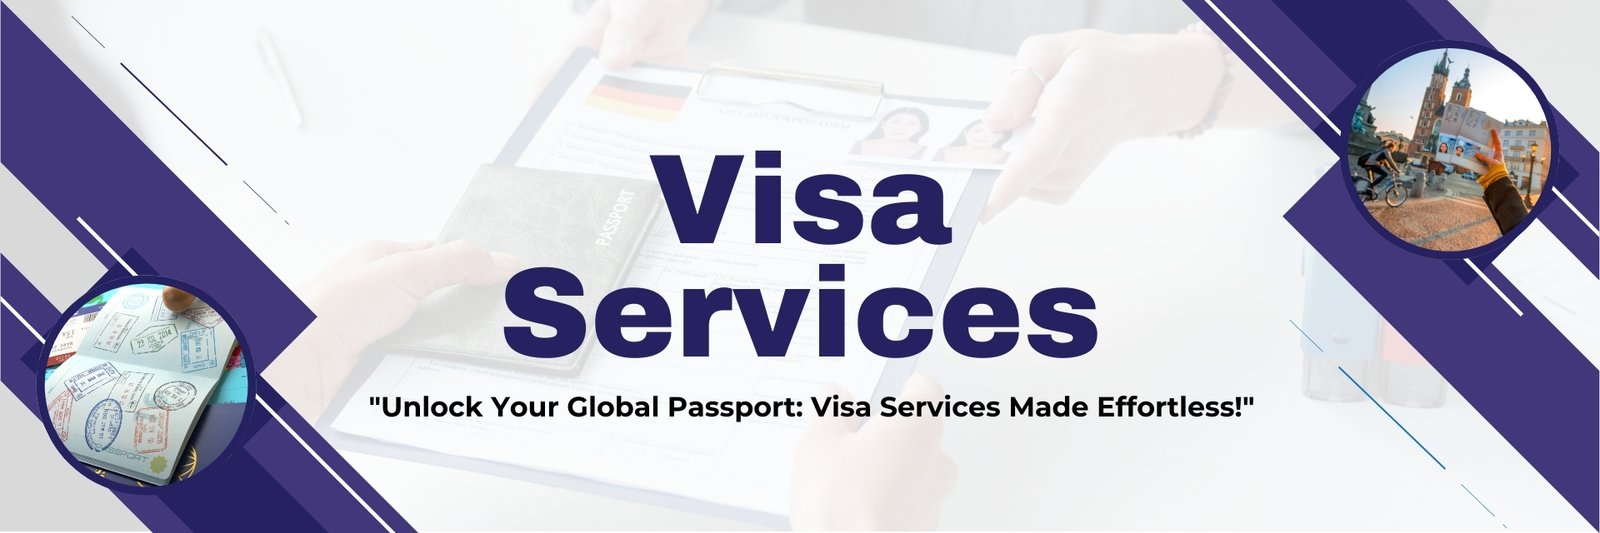 Sarvodaya Holiday - Visa Services - Banner